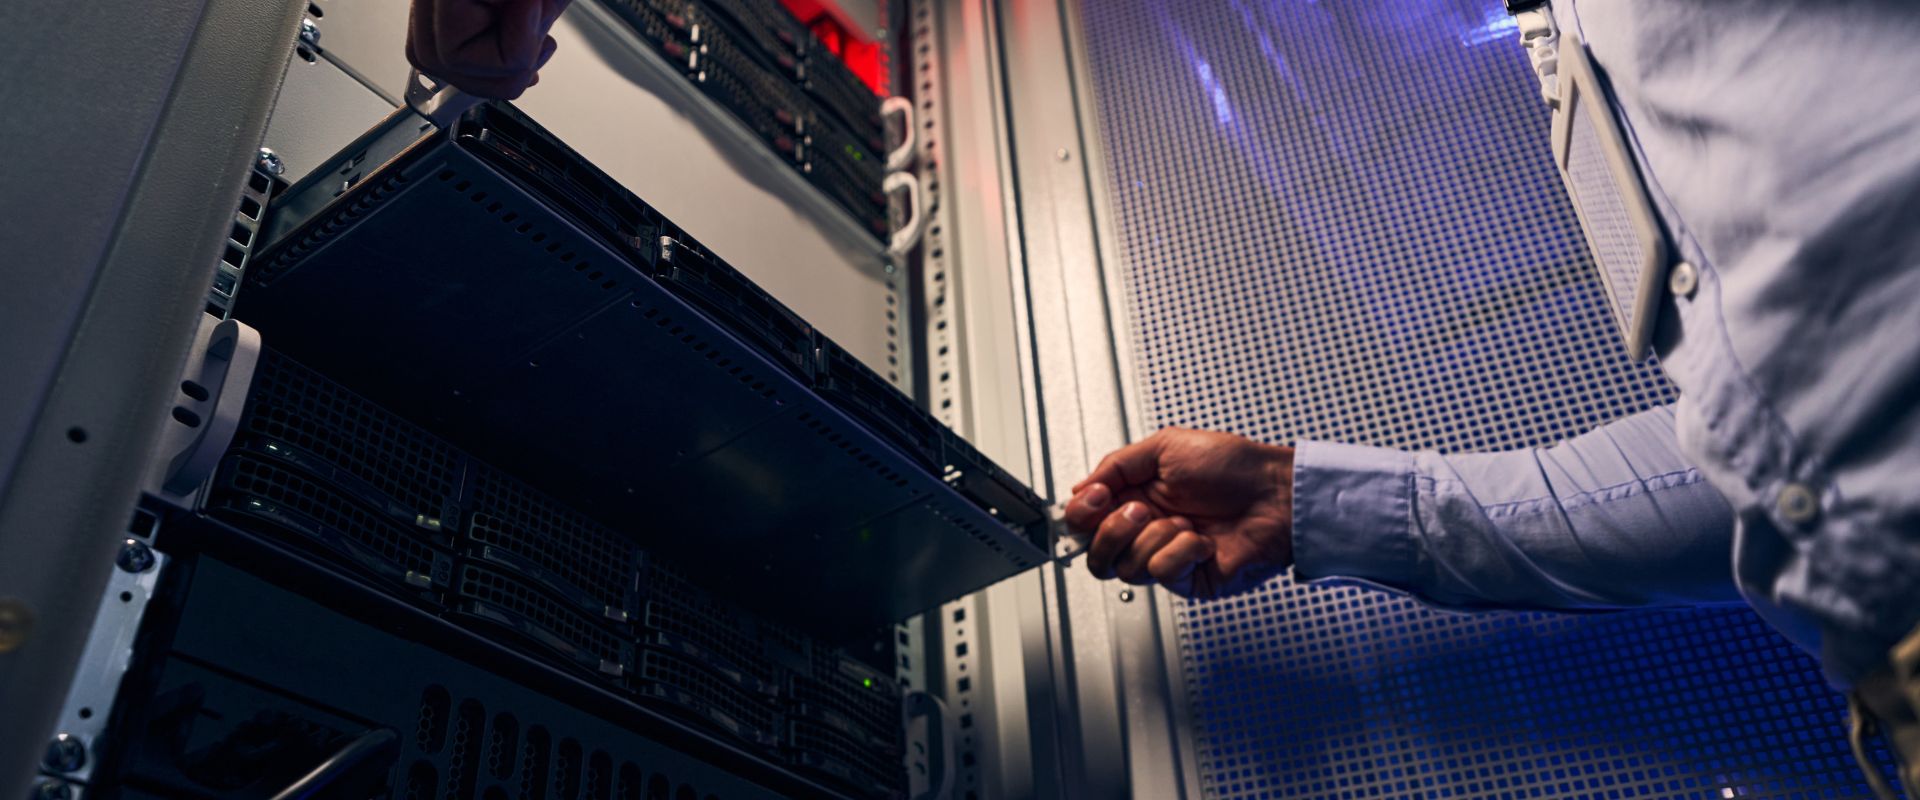 background image of a man werking on server installation